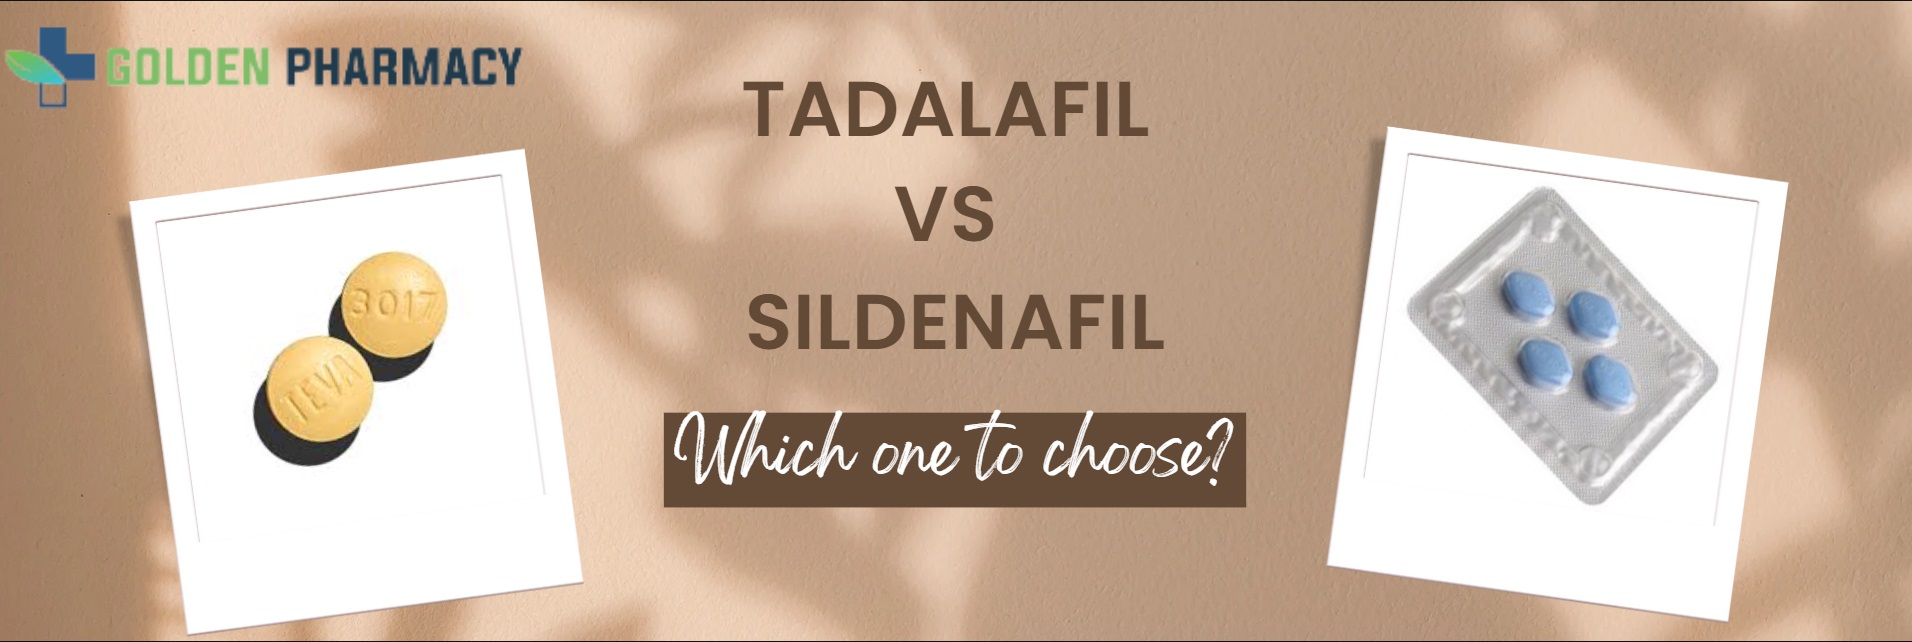 Tadalafil vs sildenafil: Which One to Choose for ED?